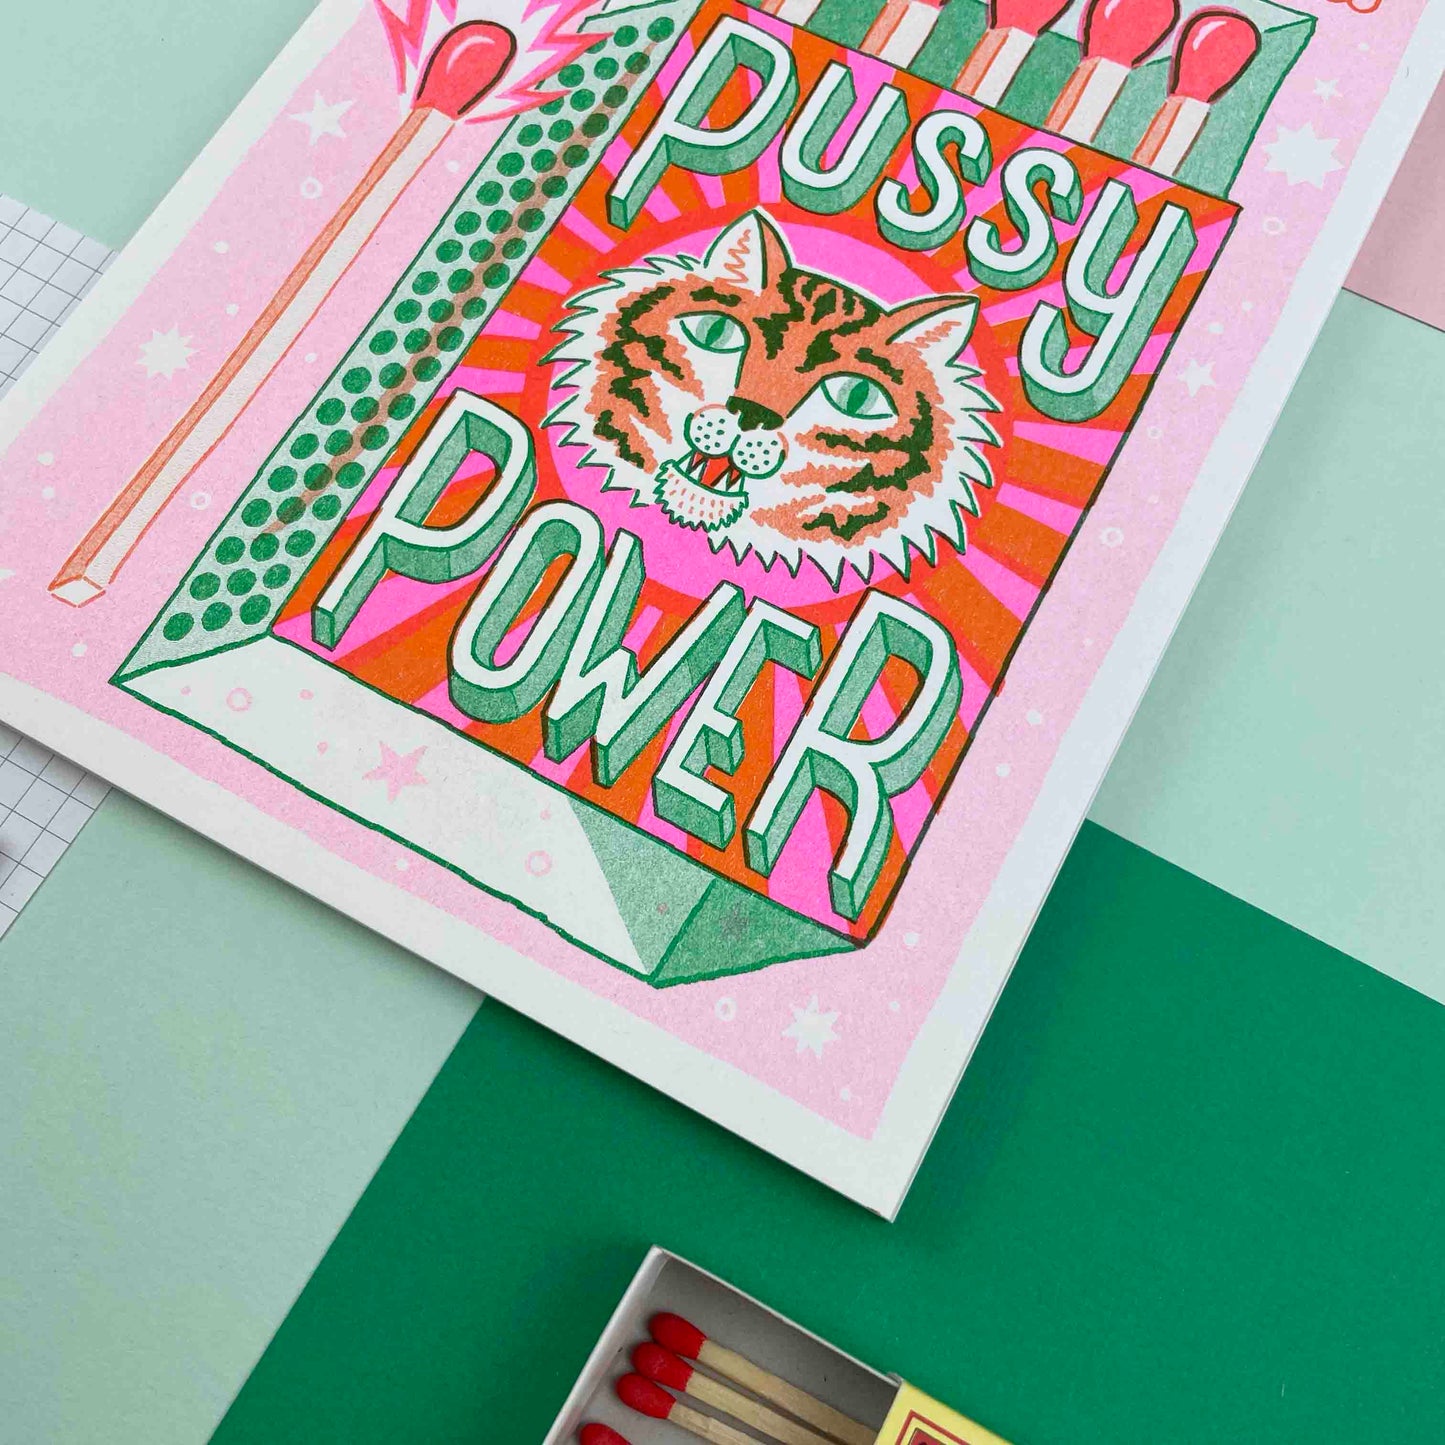 A5 Pussy Power Matchbox Risograph print